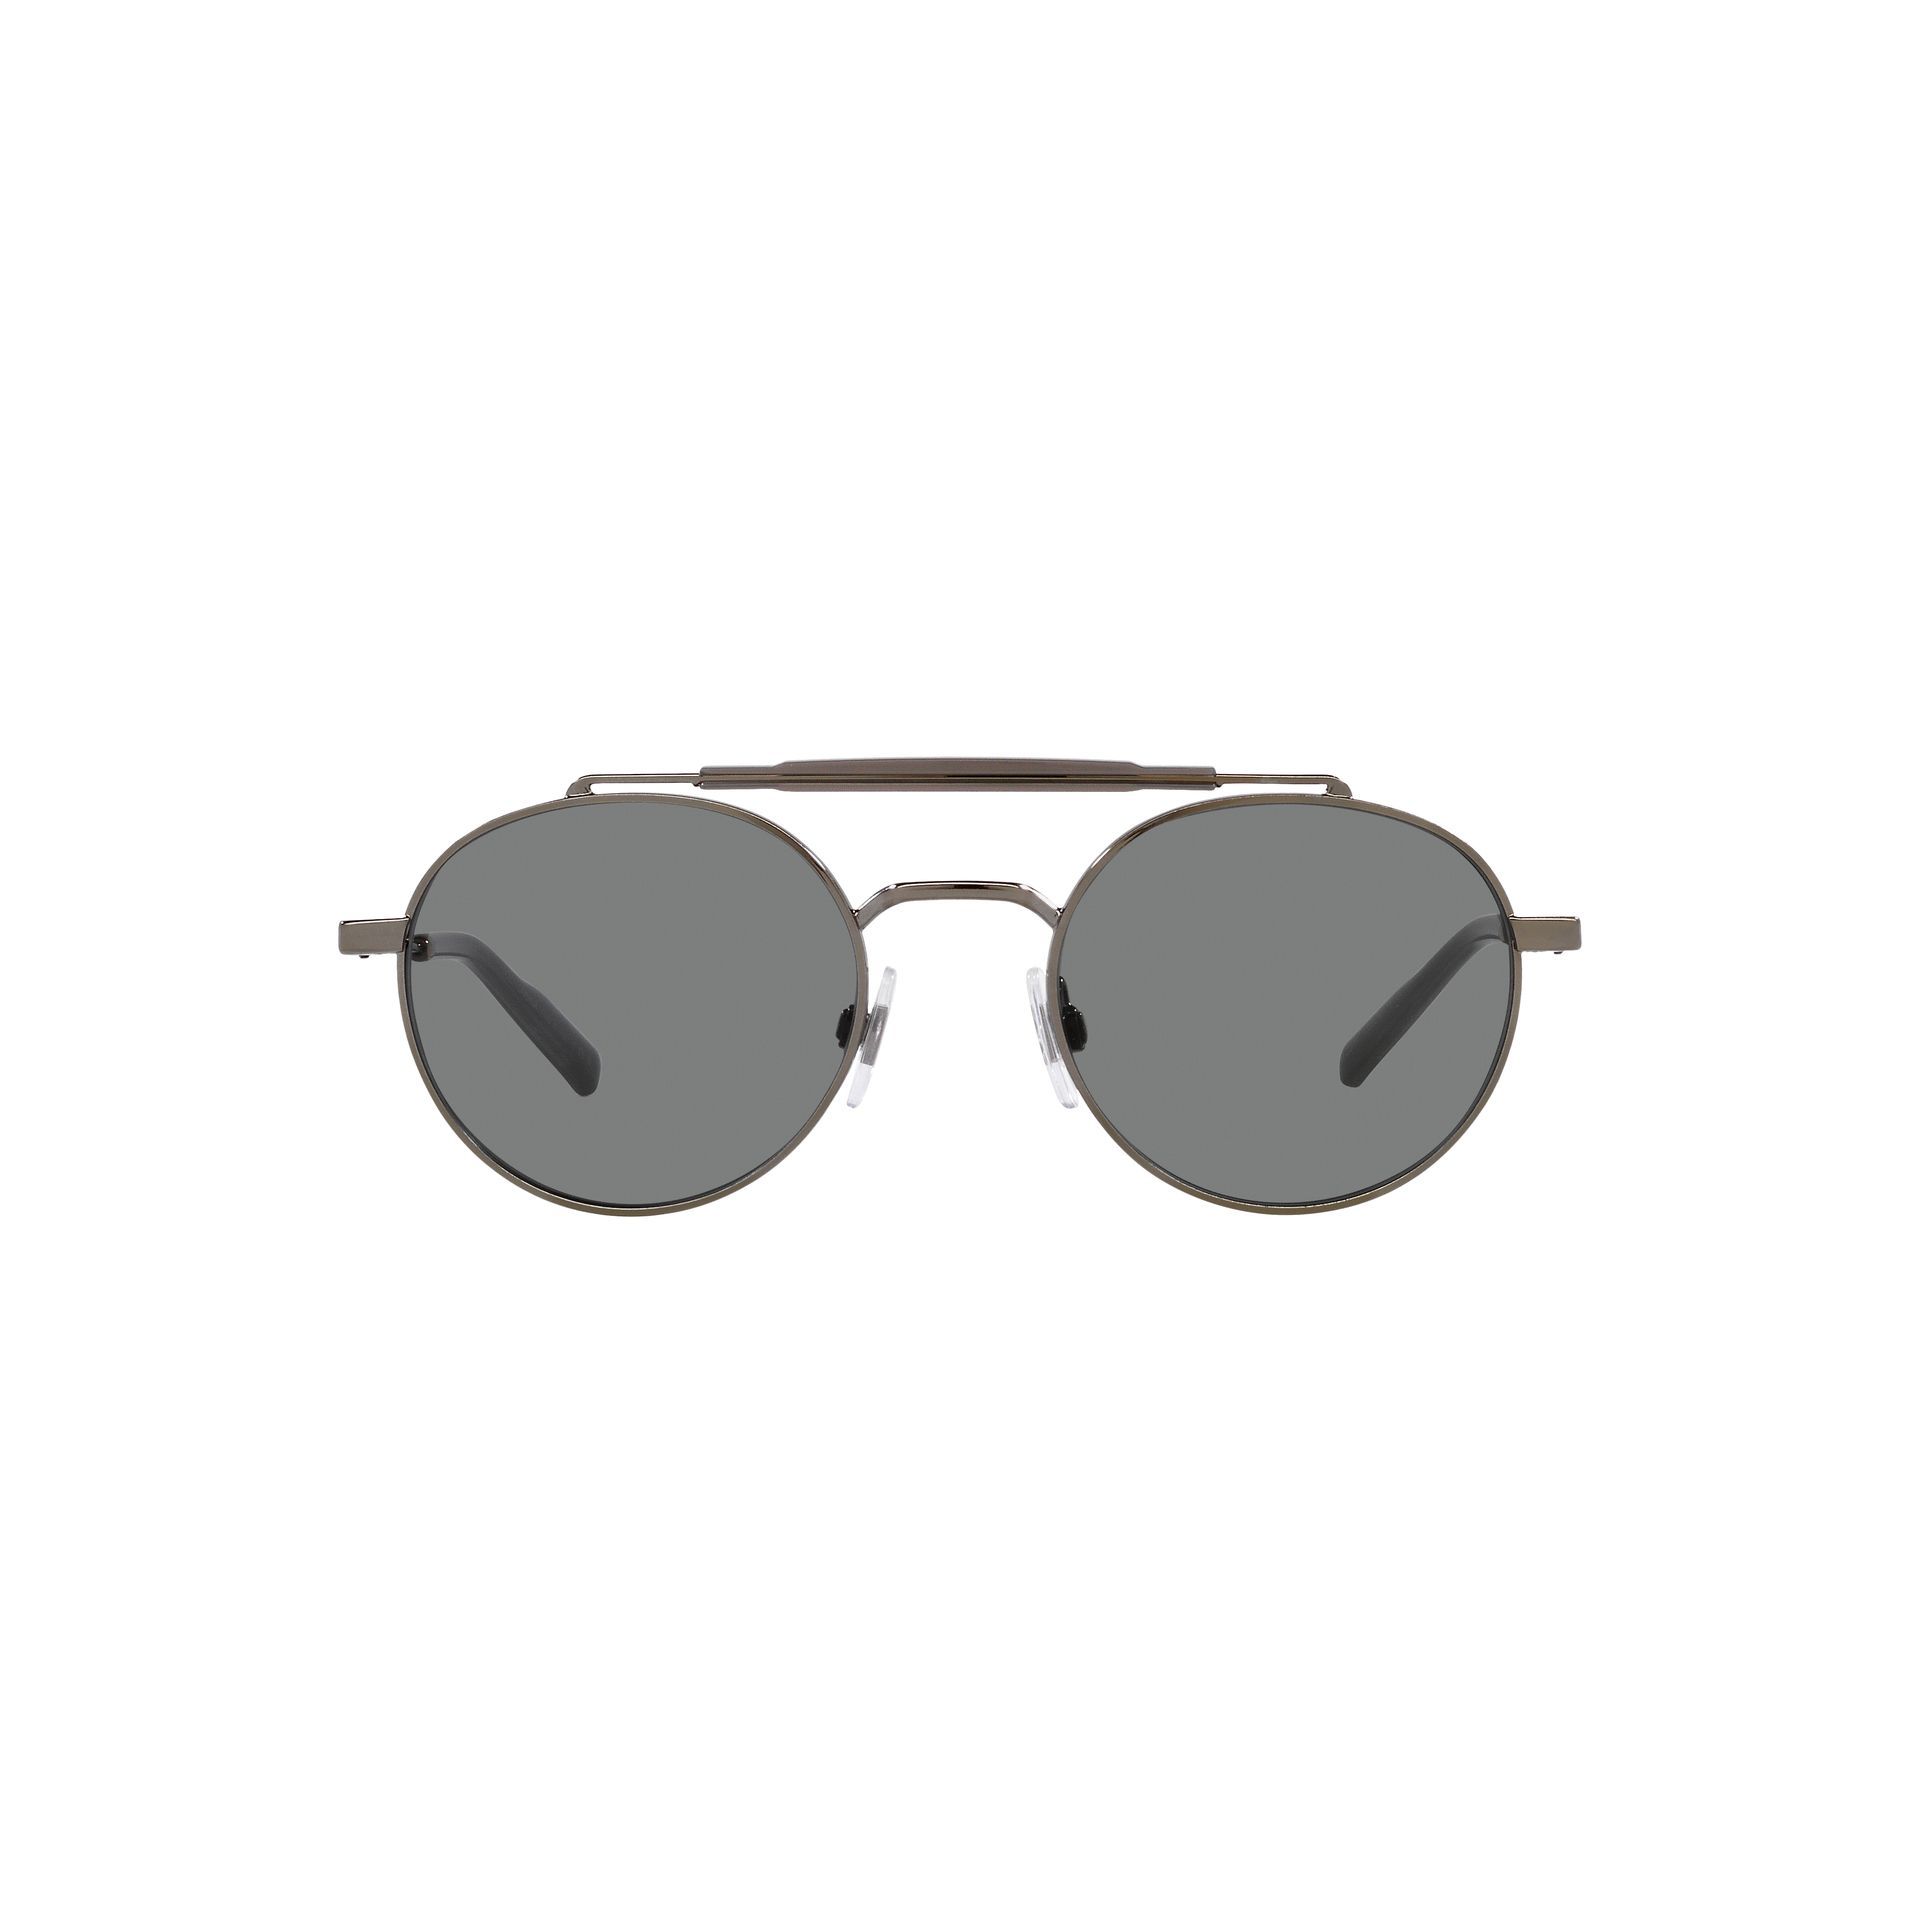 0DG2295 Round Sunglasses 133587 - size 51